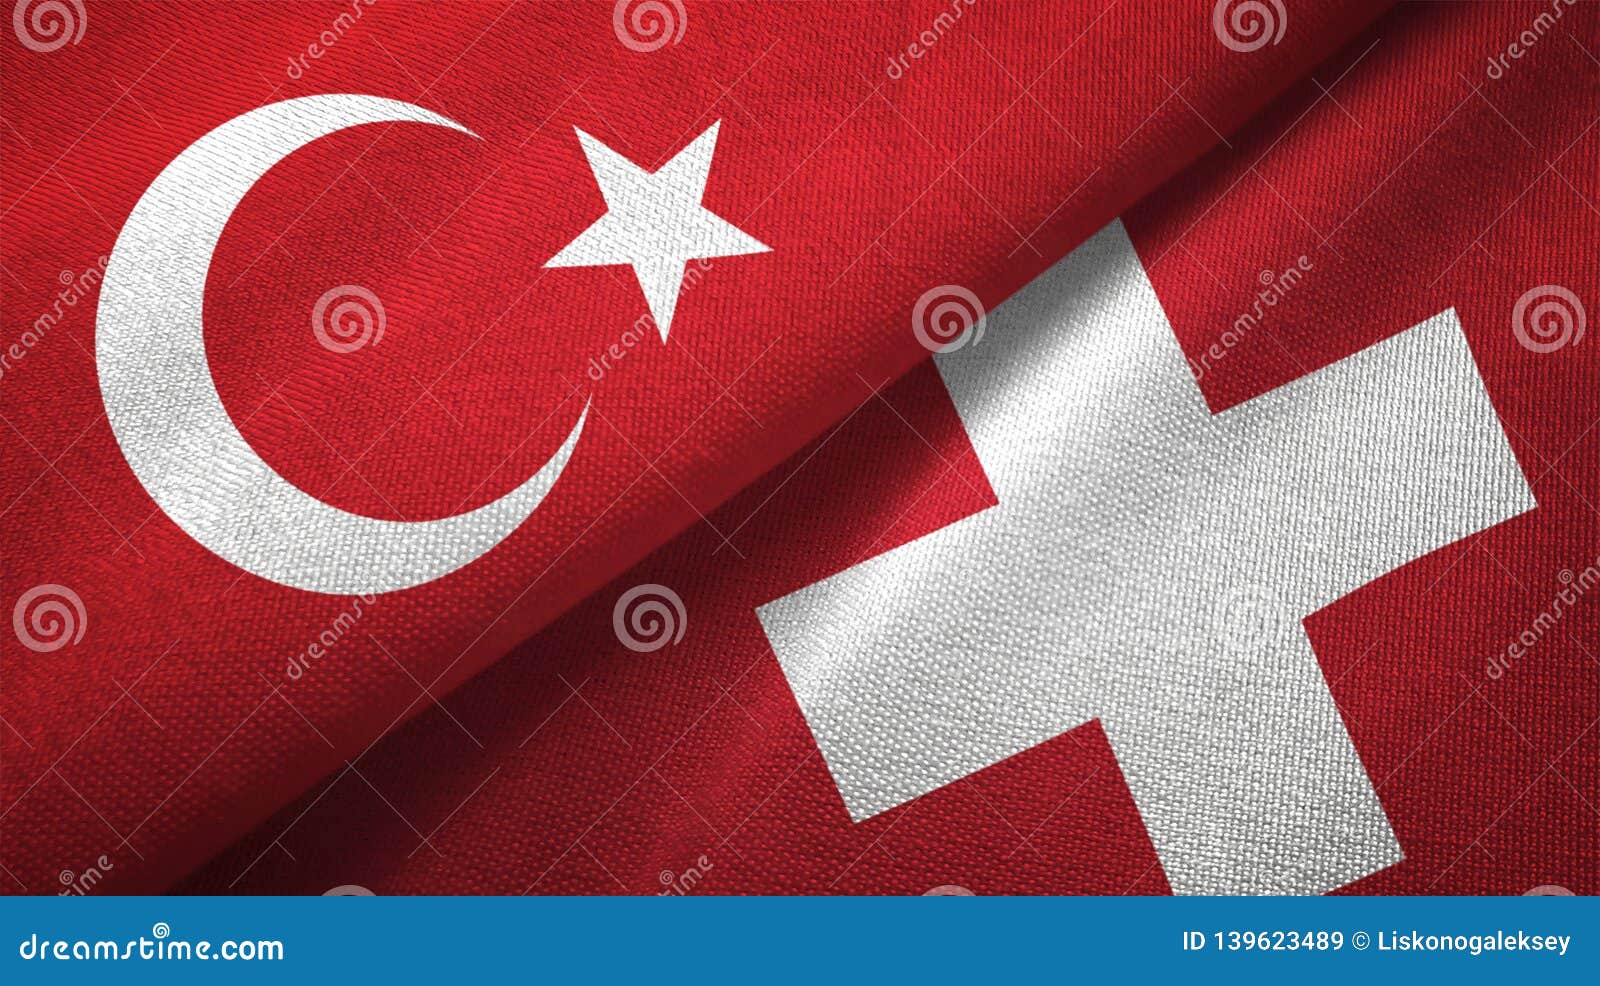 Tr ch. Swiss Турция. Турция и Швейцария флаги. Экономика Турции. Швейцарские компании.